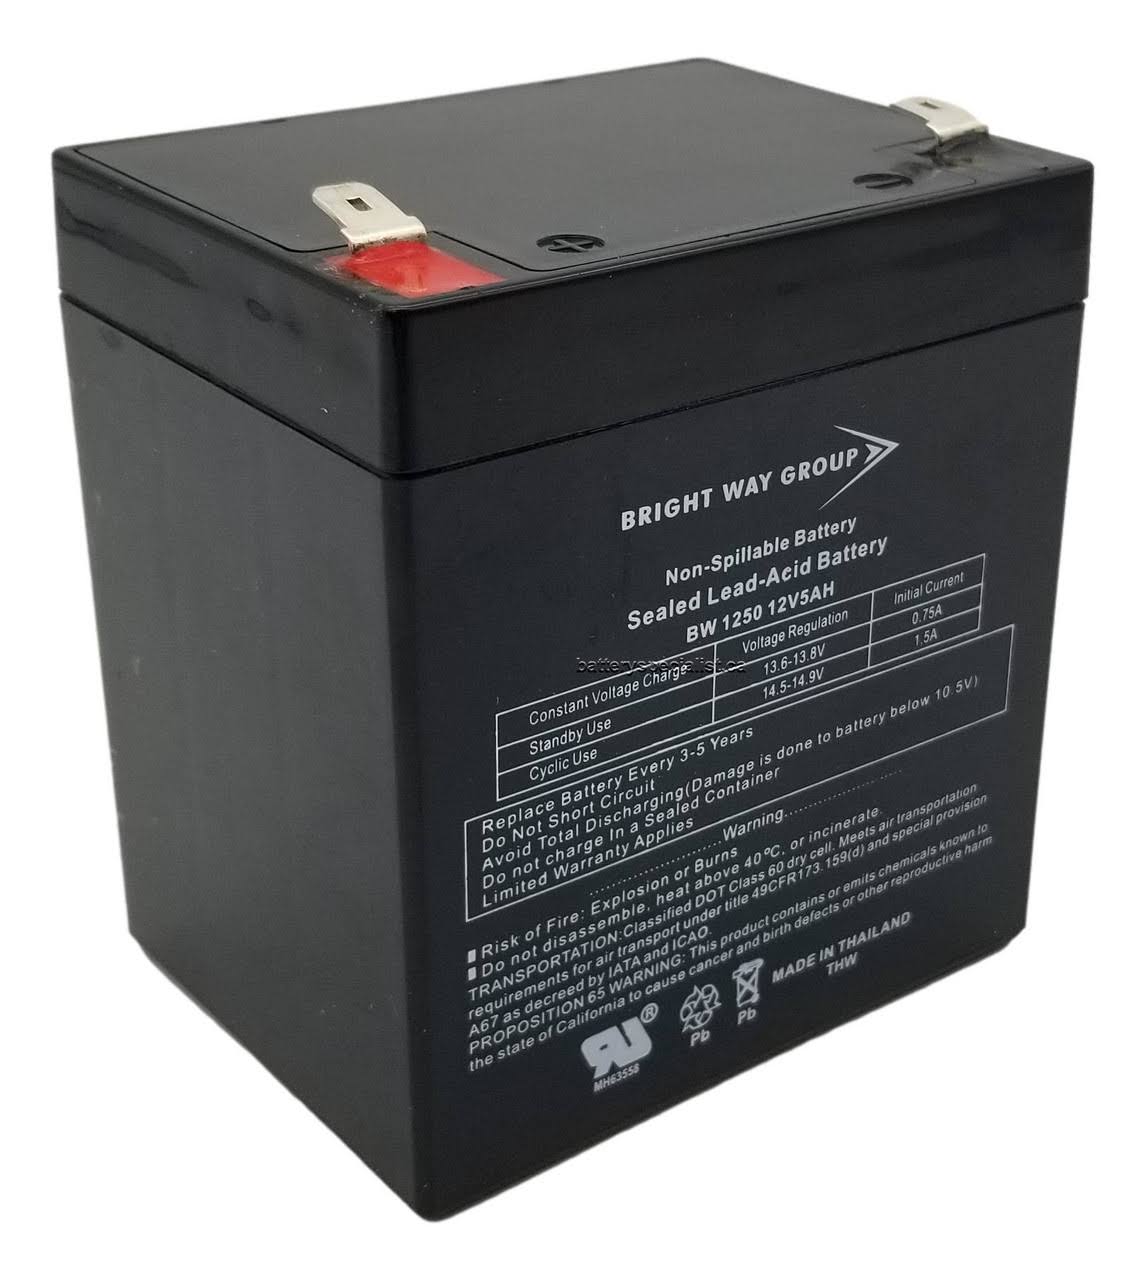 BW1250 - 12 Volts 5Ah - Terminal F2 - SLA/AGM Battery - HX12-5